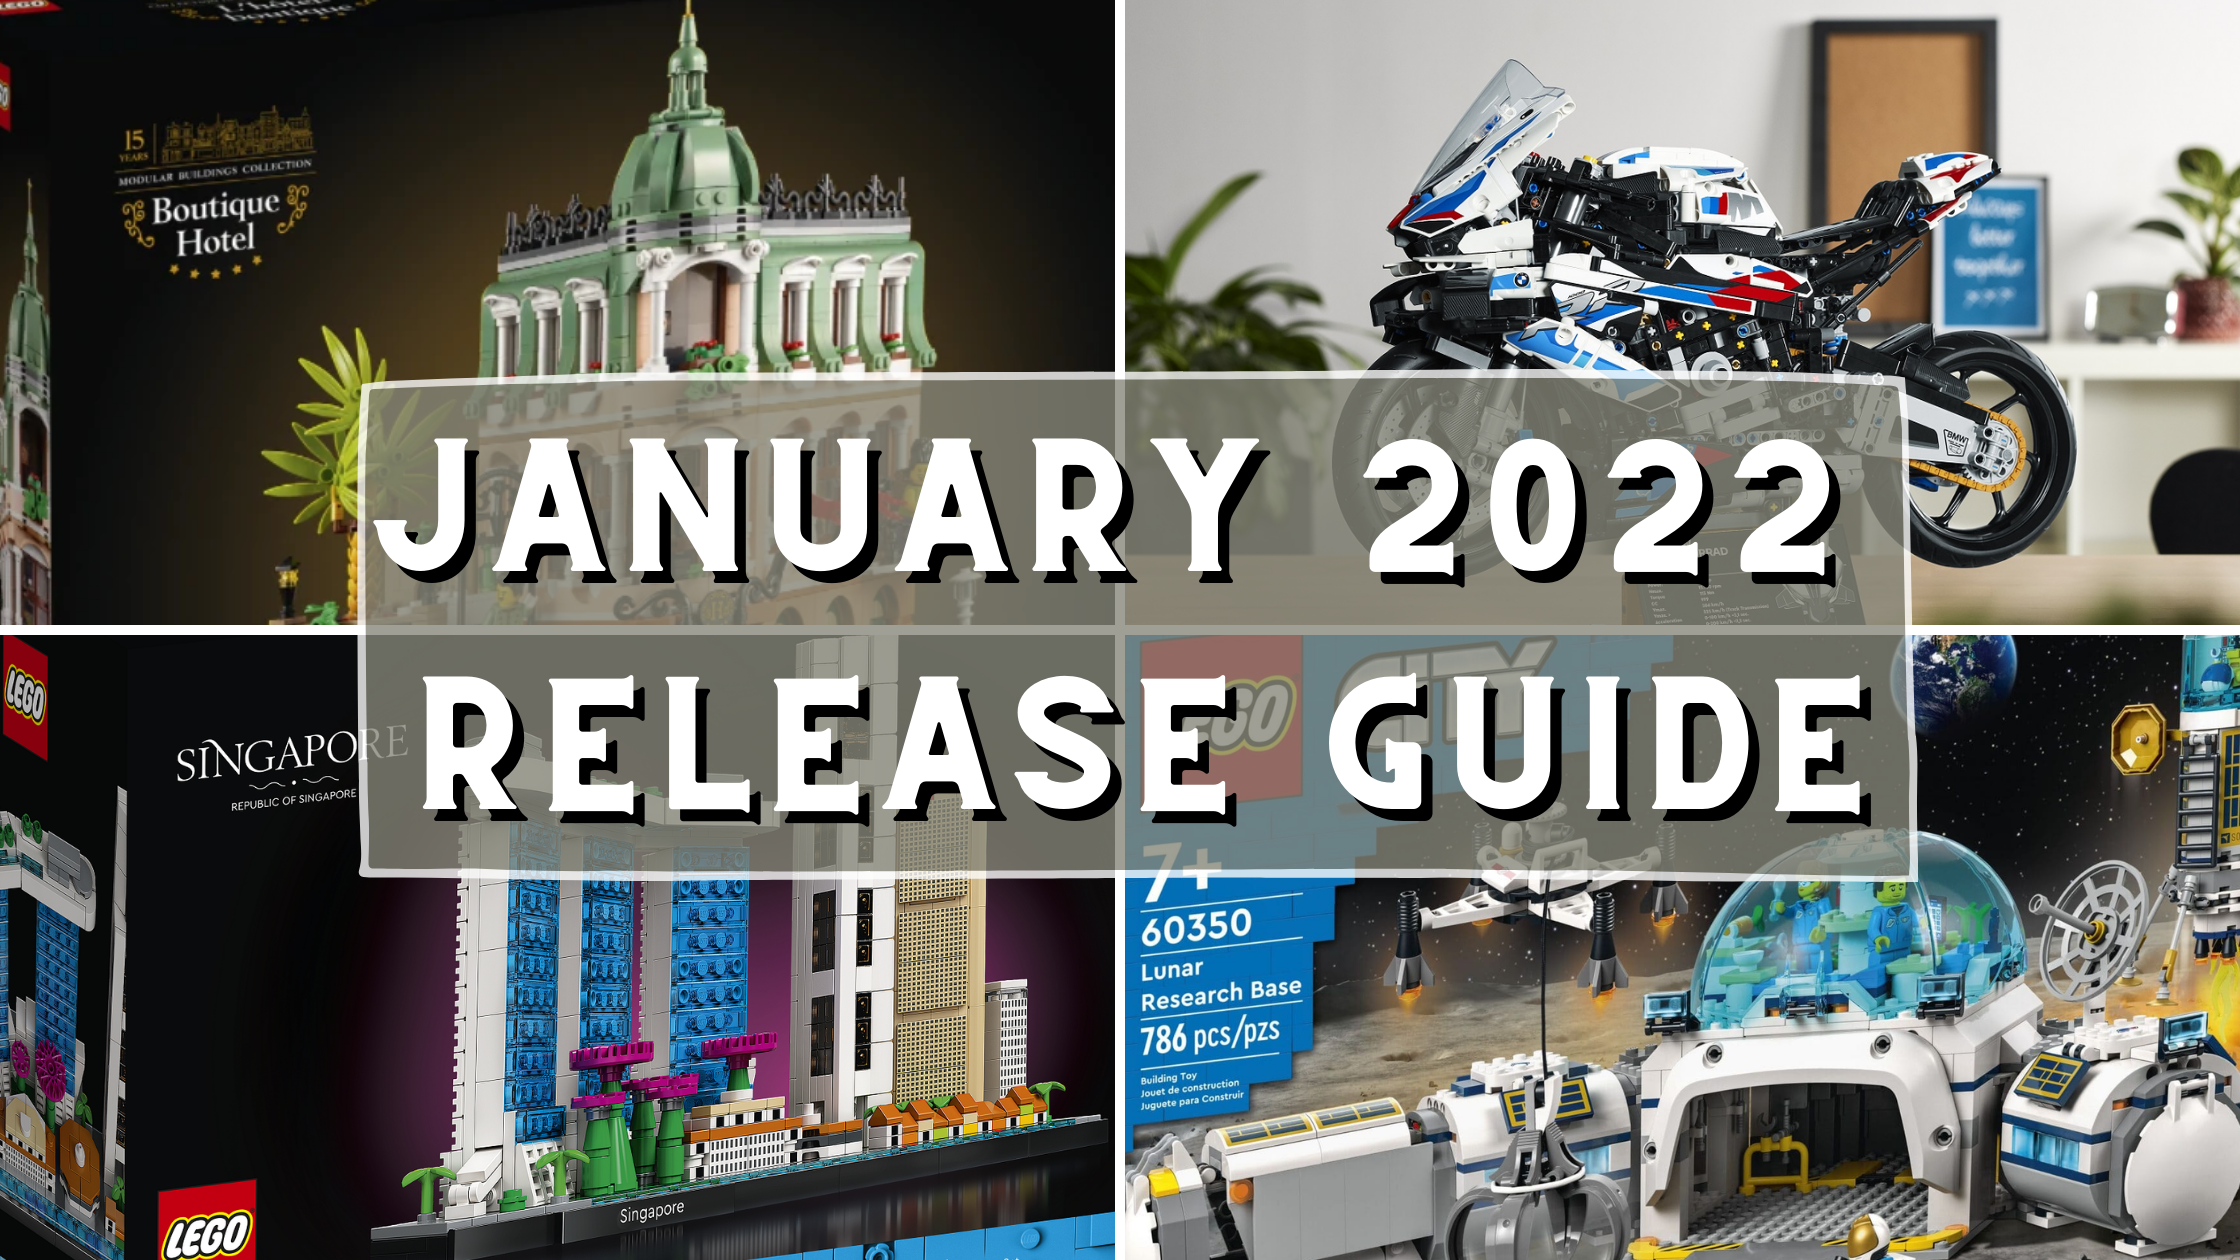 Lego Calendar December 2022 Lego February 2022 New Release Guide - Jay's Brick Blog